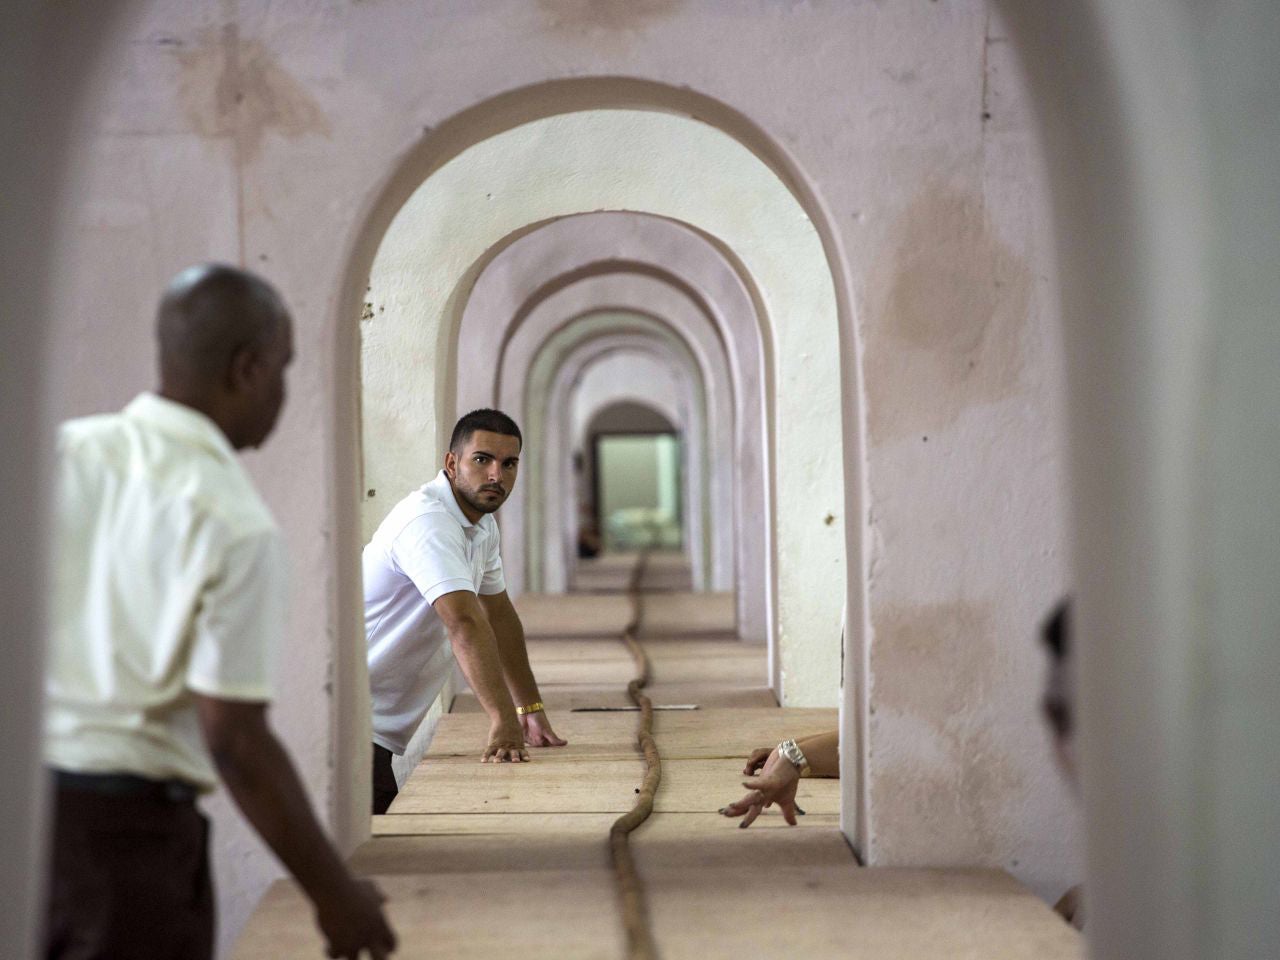 Workers help Cuban cigar roller Jose "Cueto" Castelar, not pictured, hand roll a 90-meter cigar in Havana